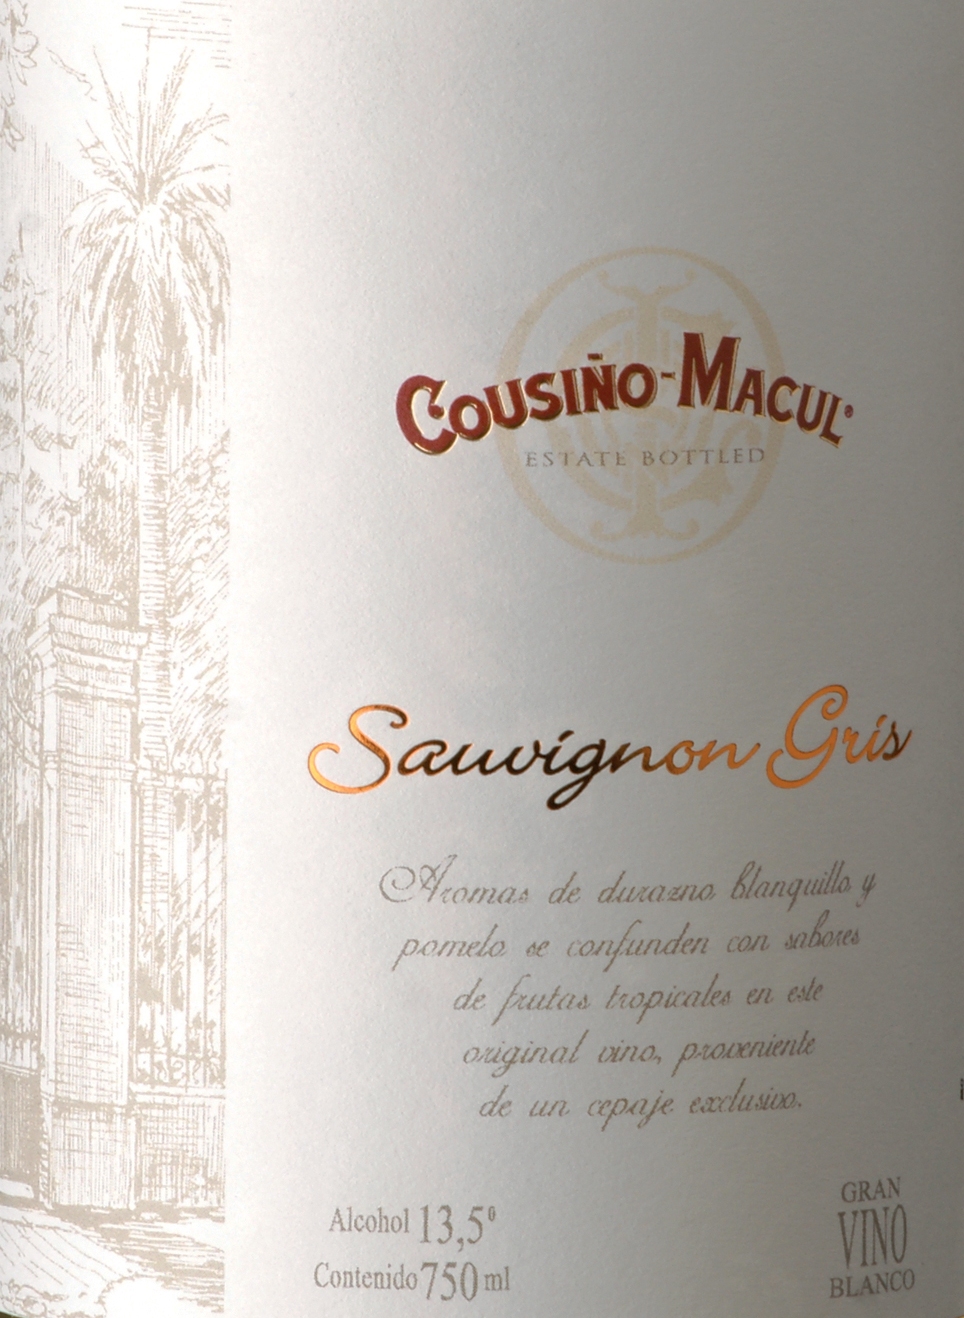 2017 Cousino Macul Sauvignon Gris - click image for full description